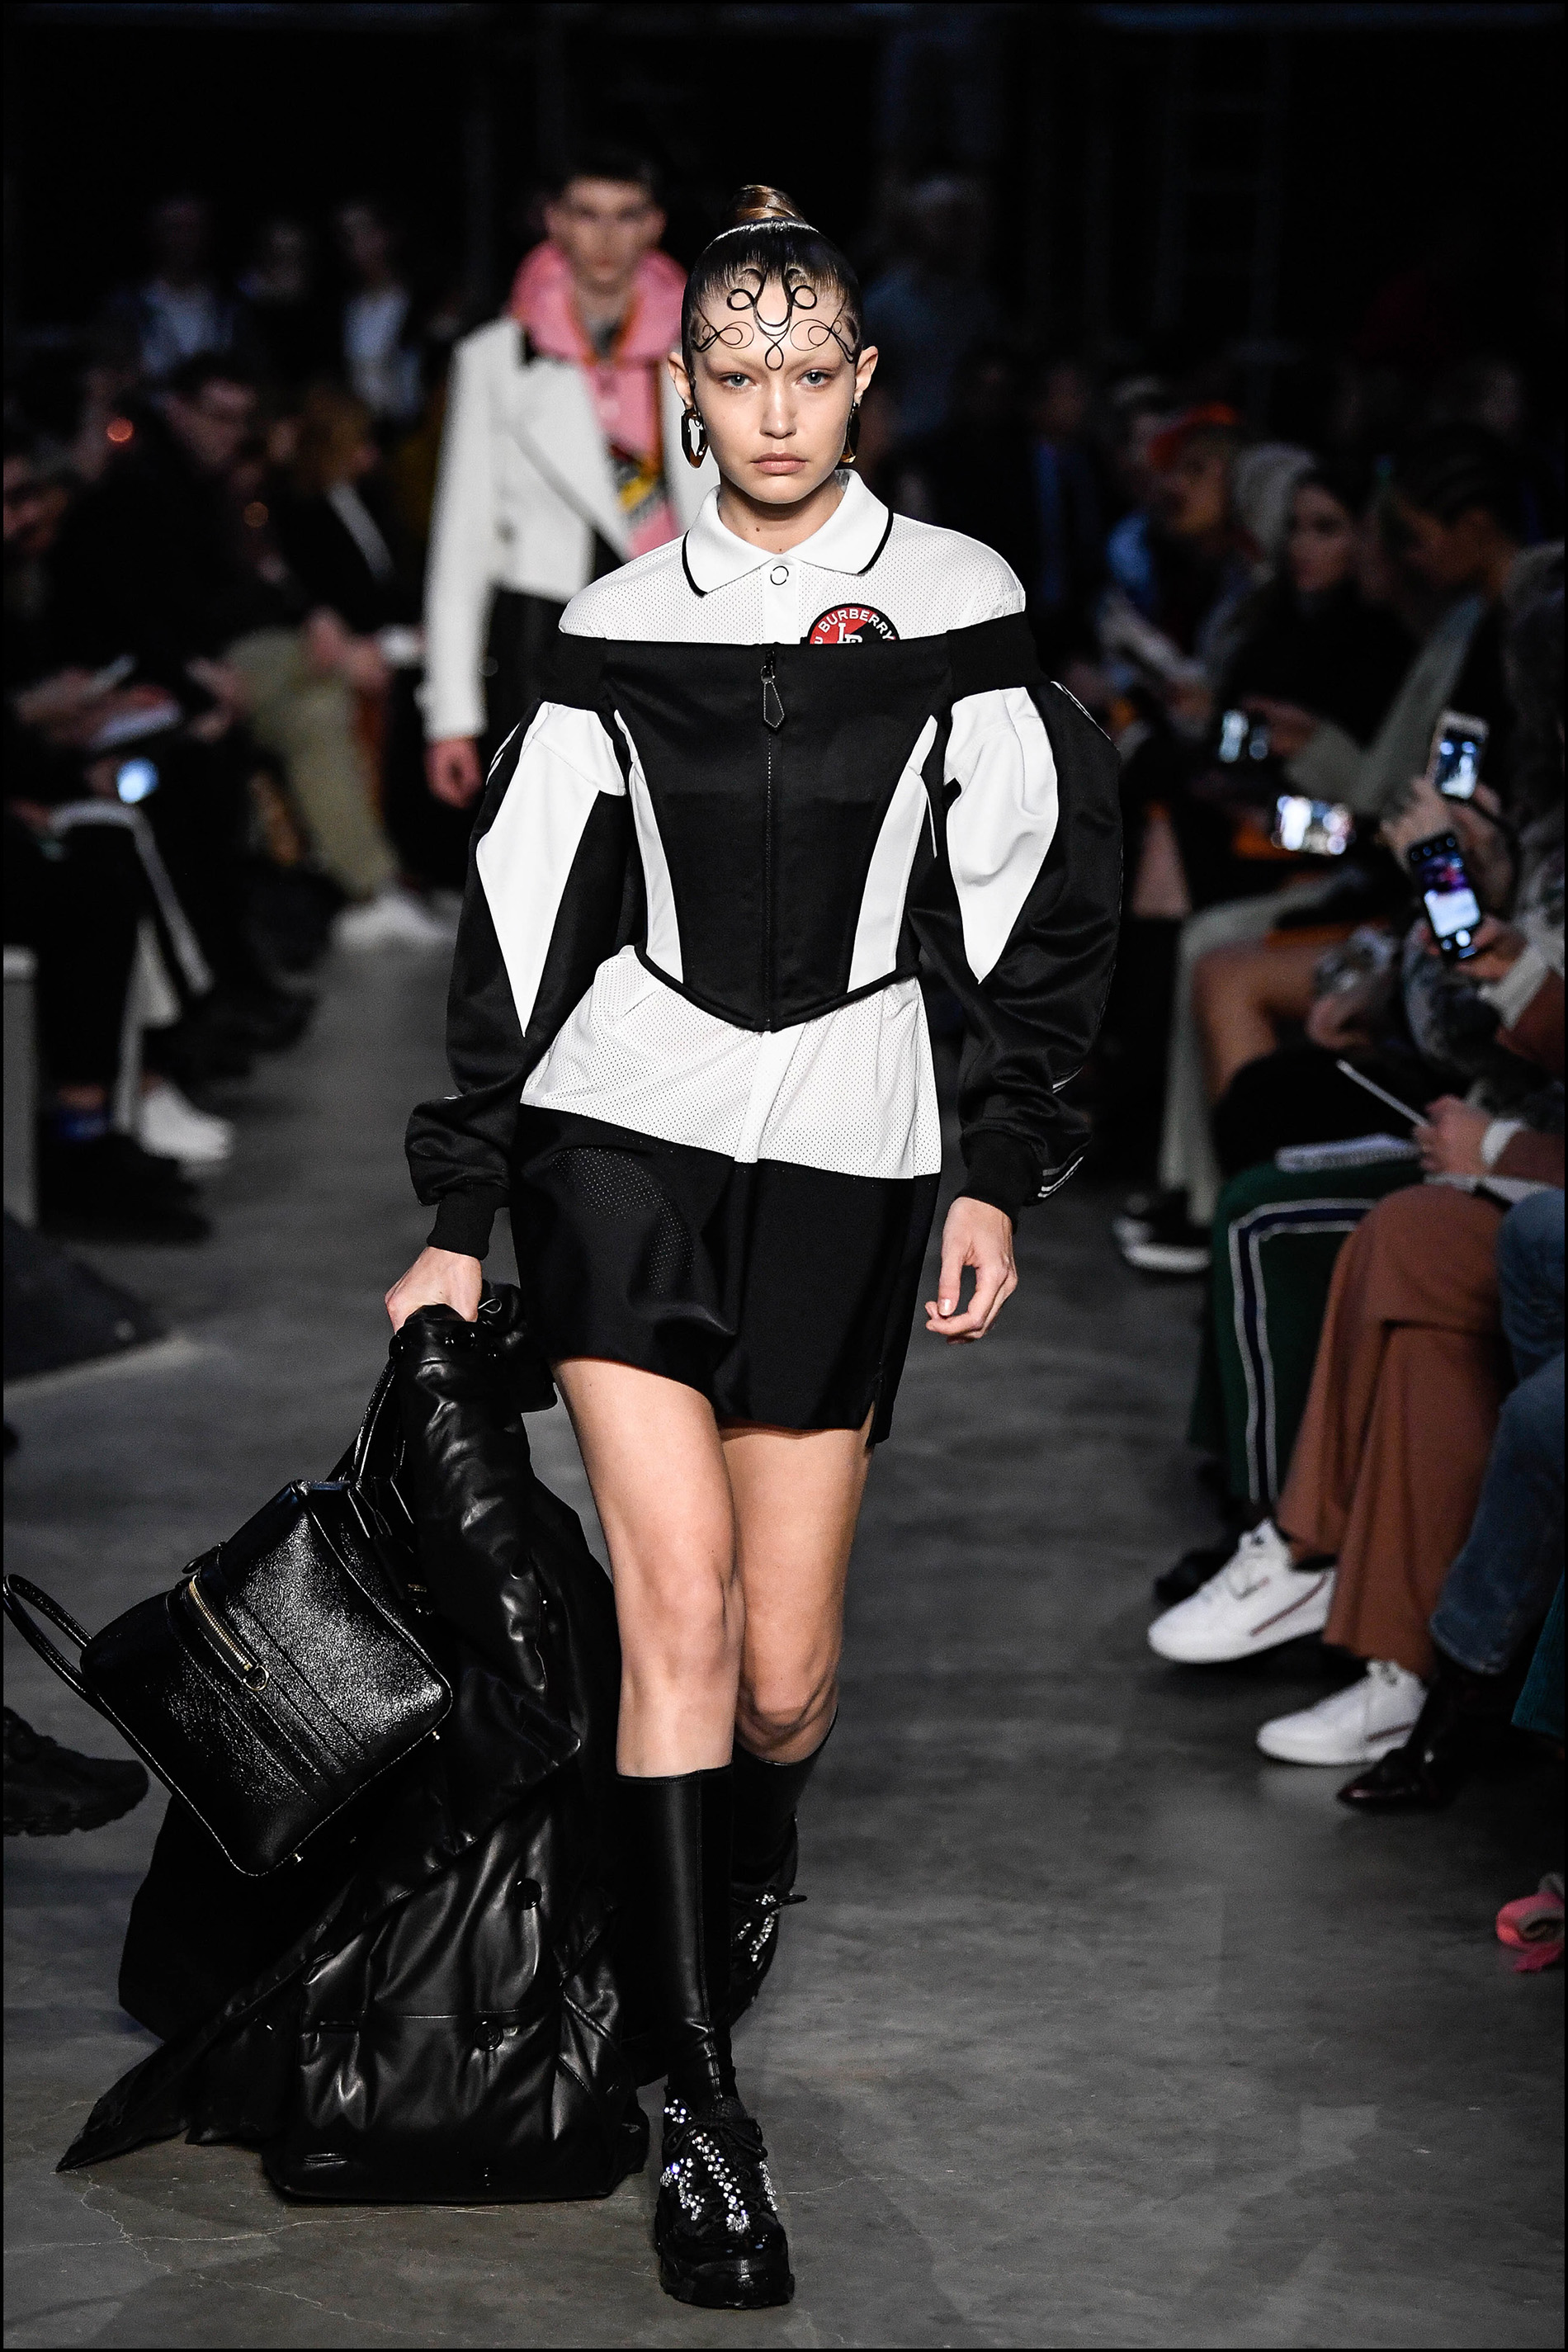 Gigi Hadid au dÈfilÈ Burberry lors de la Fashion Week automne-hiver 2019/2020 ‡ Londres, Royaume Uni, le 17 fÈvrier 2019. A model walks the runway at the Burberry show during London Fashion Week in London, UK, on February 17, 2019.